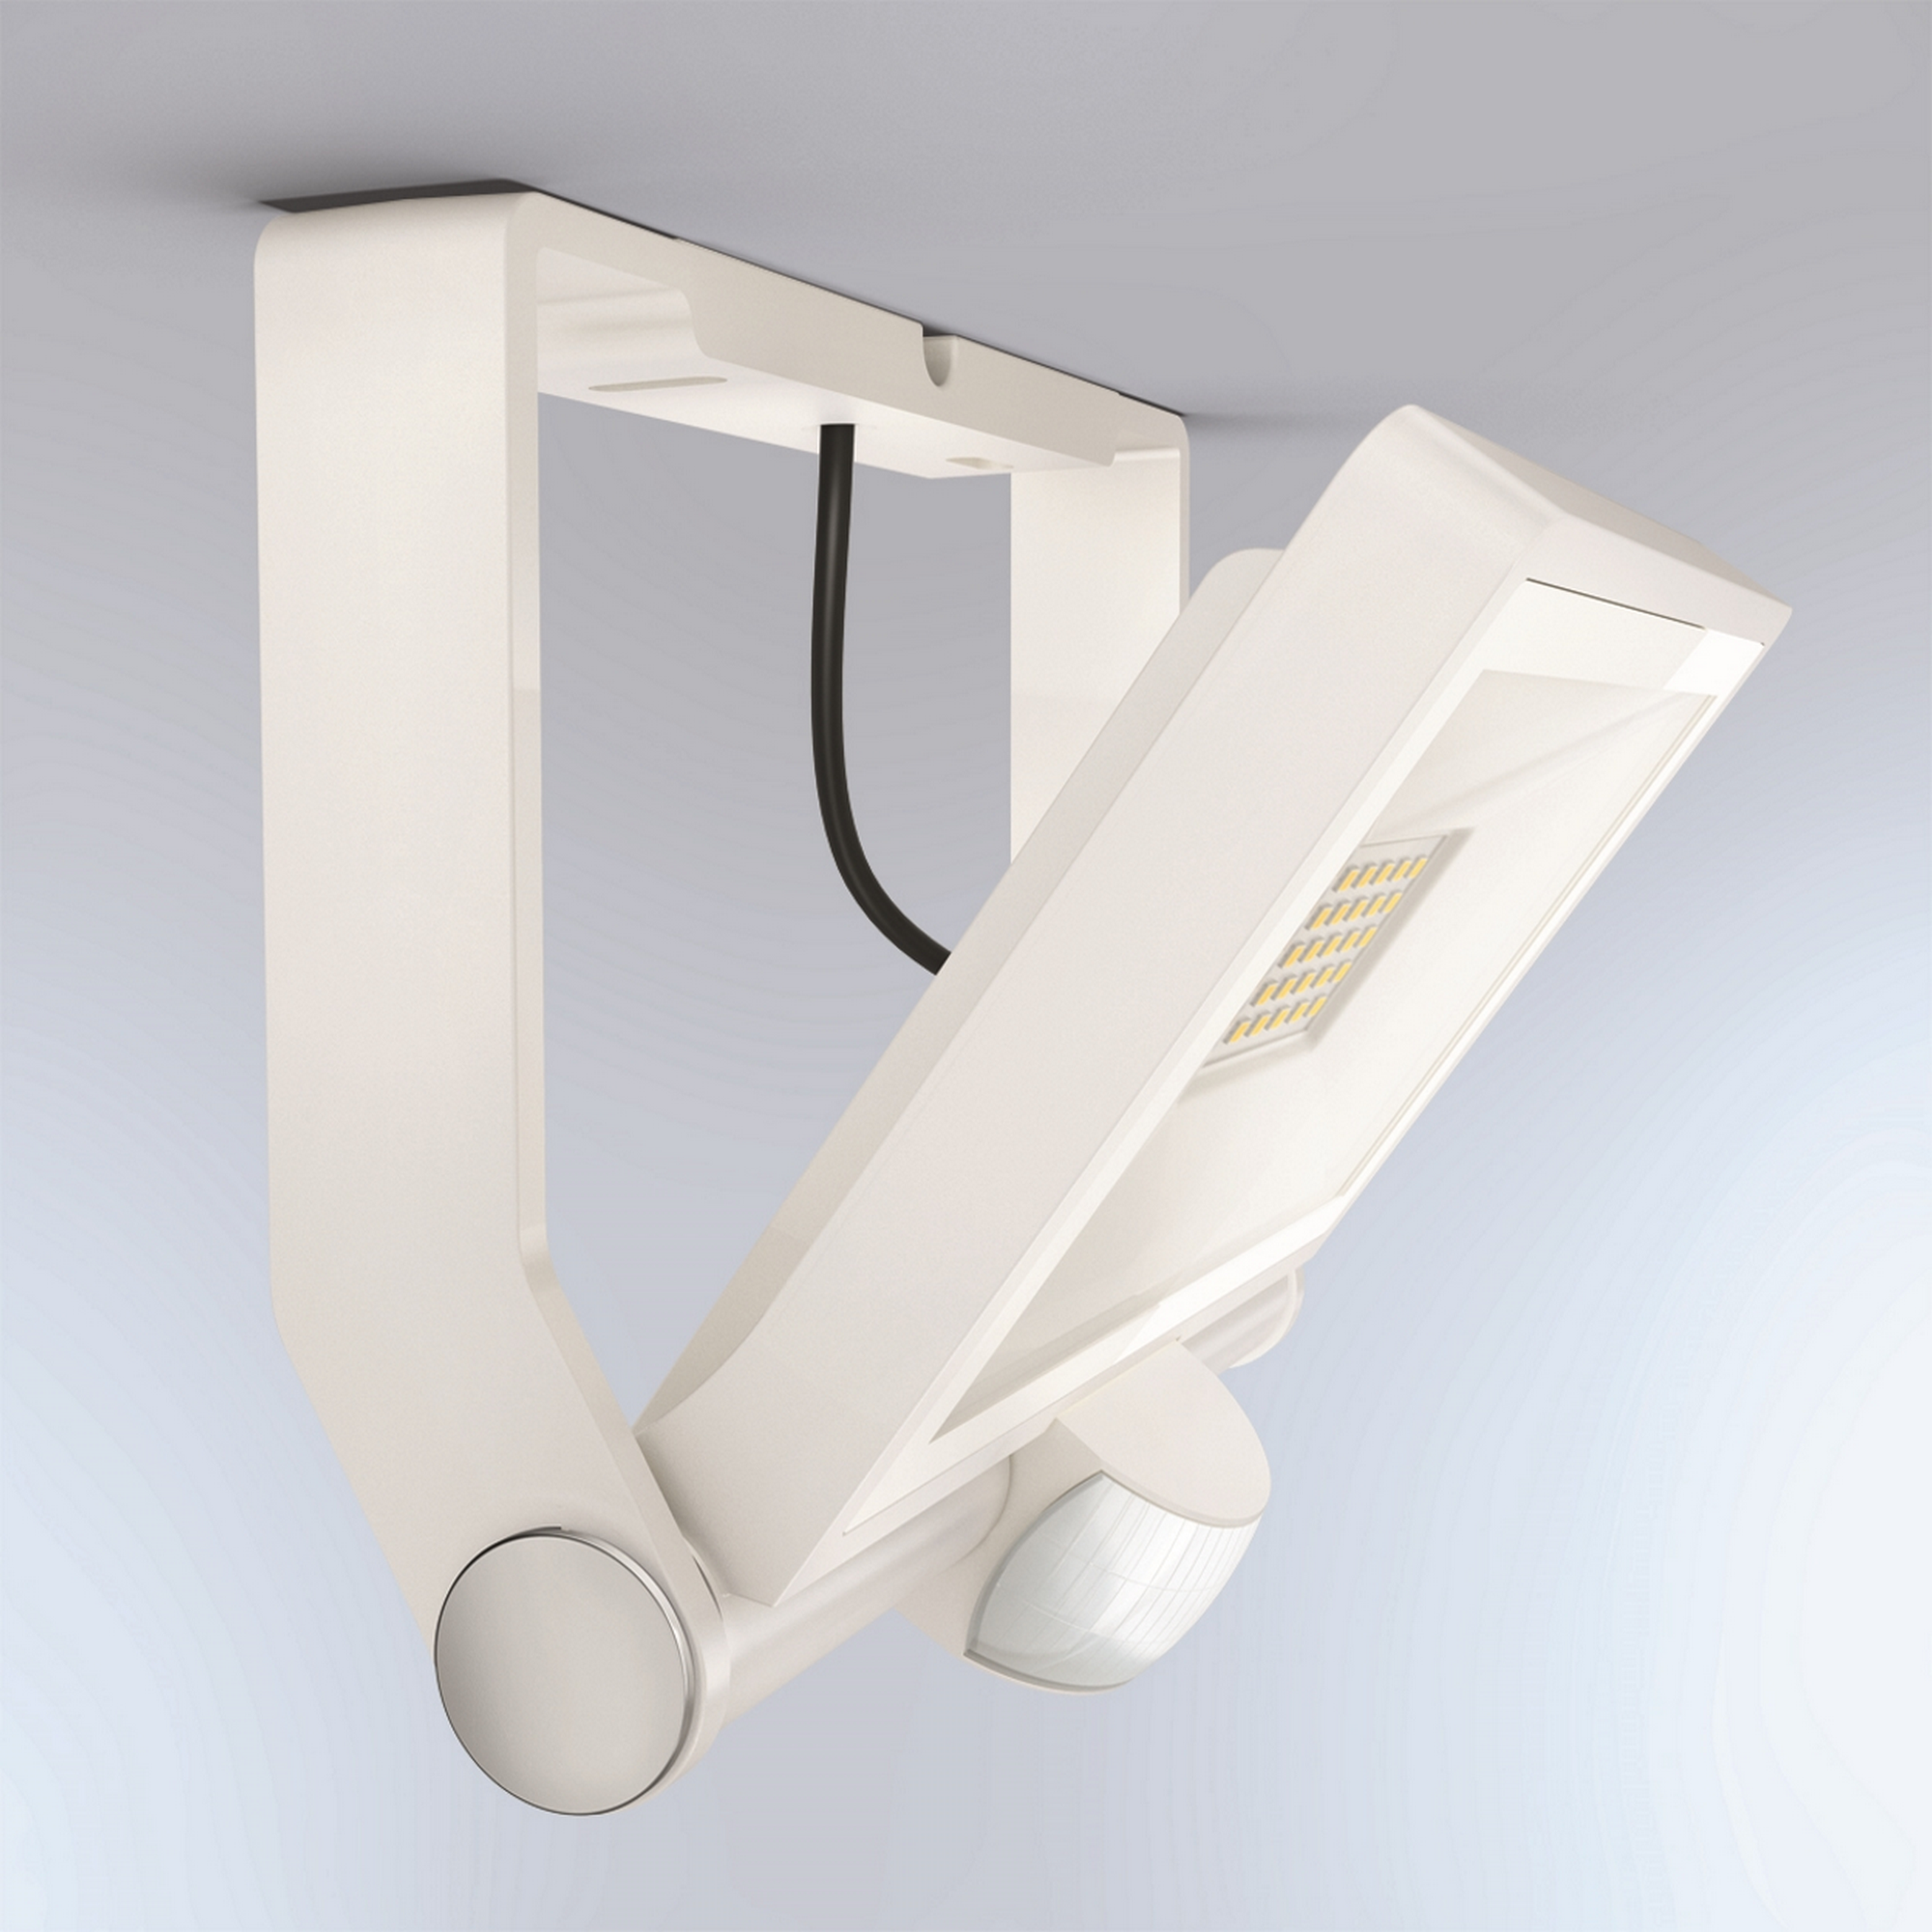 LED-Wandstrahler 'XLED ONE S' mit Bewegungsmelder weiß 22,9 x 19,5 cm 18,6 W + product picture